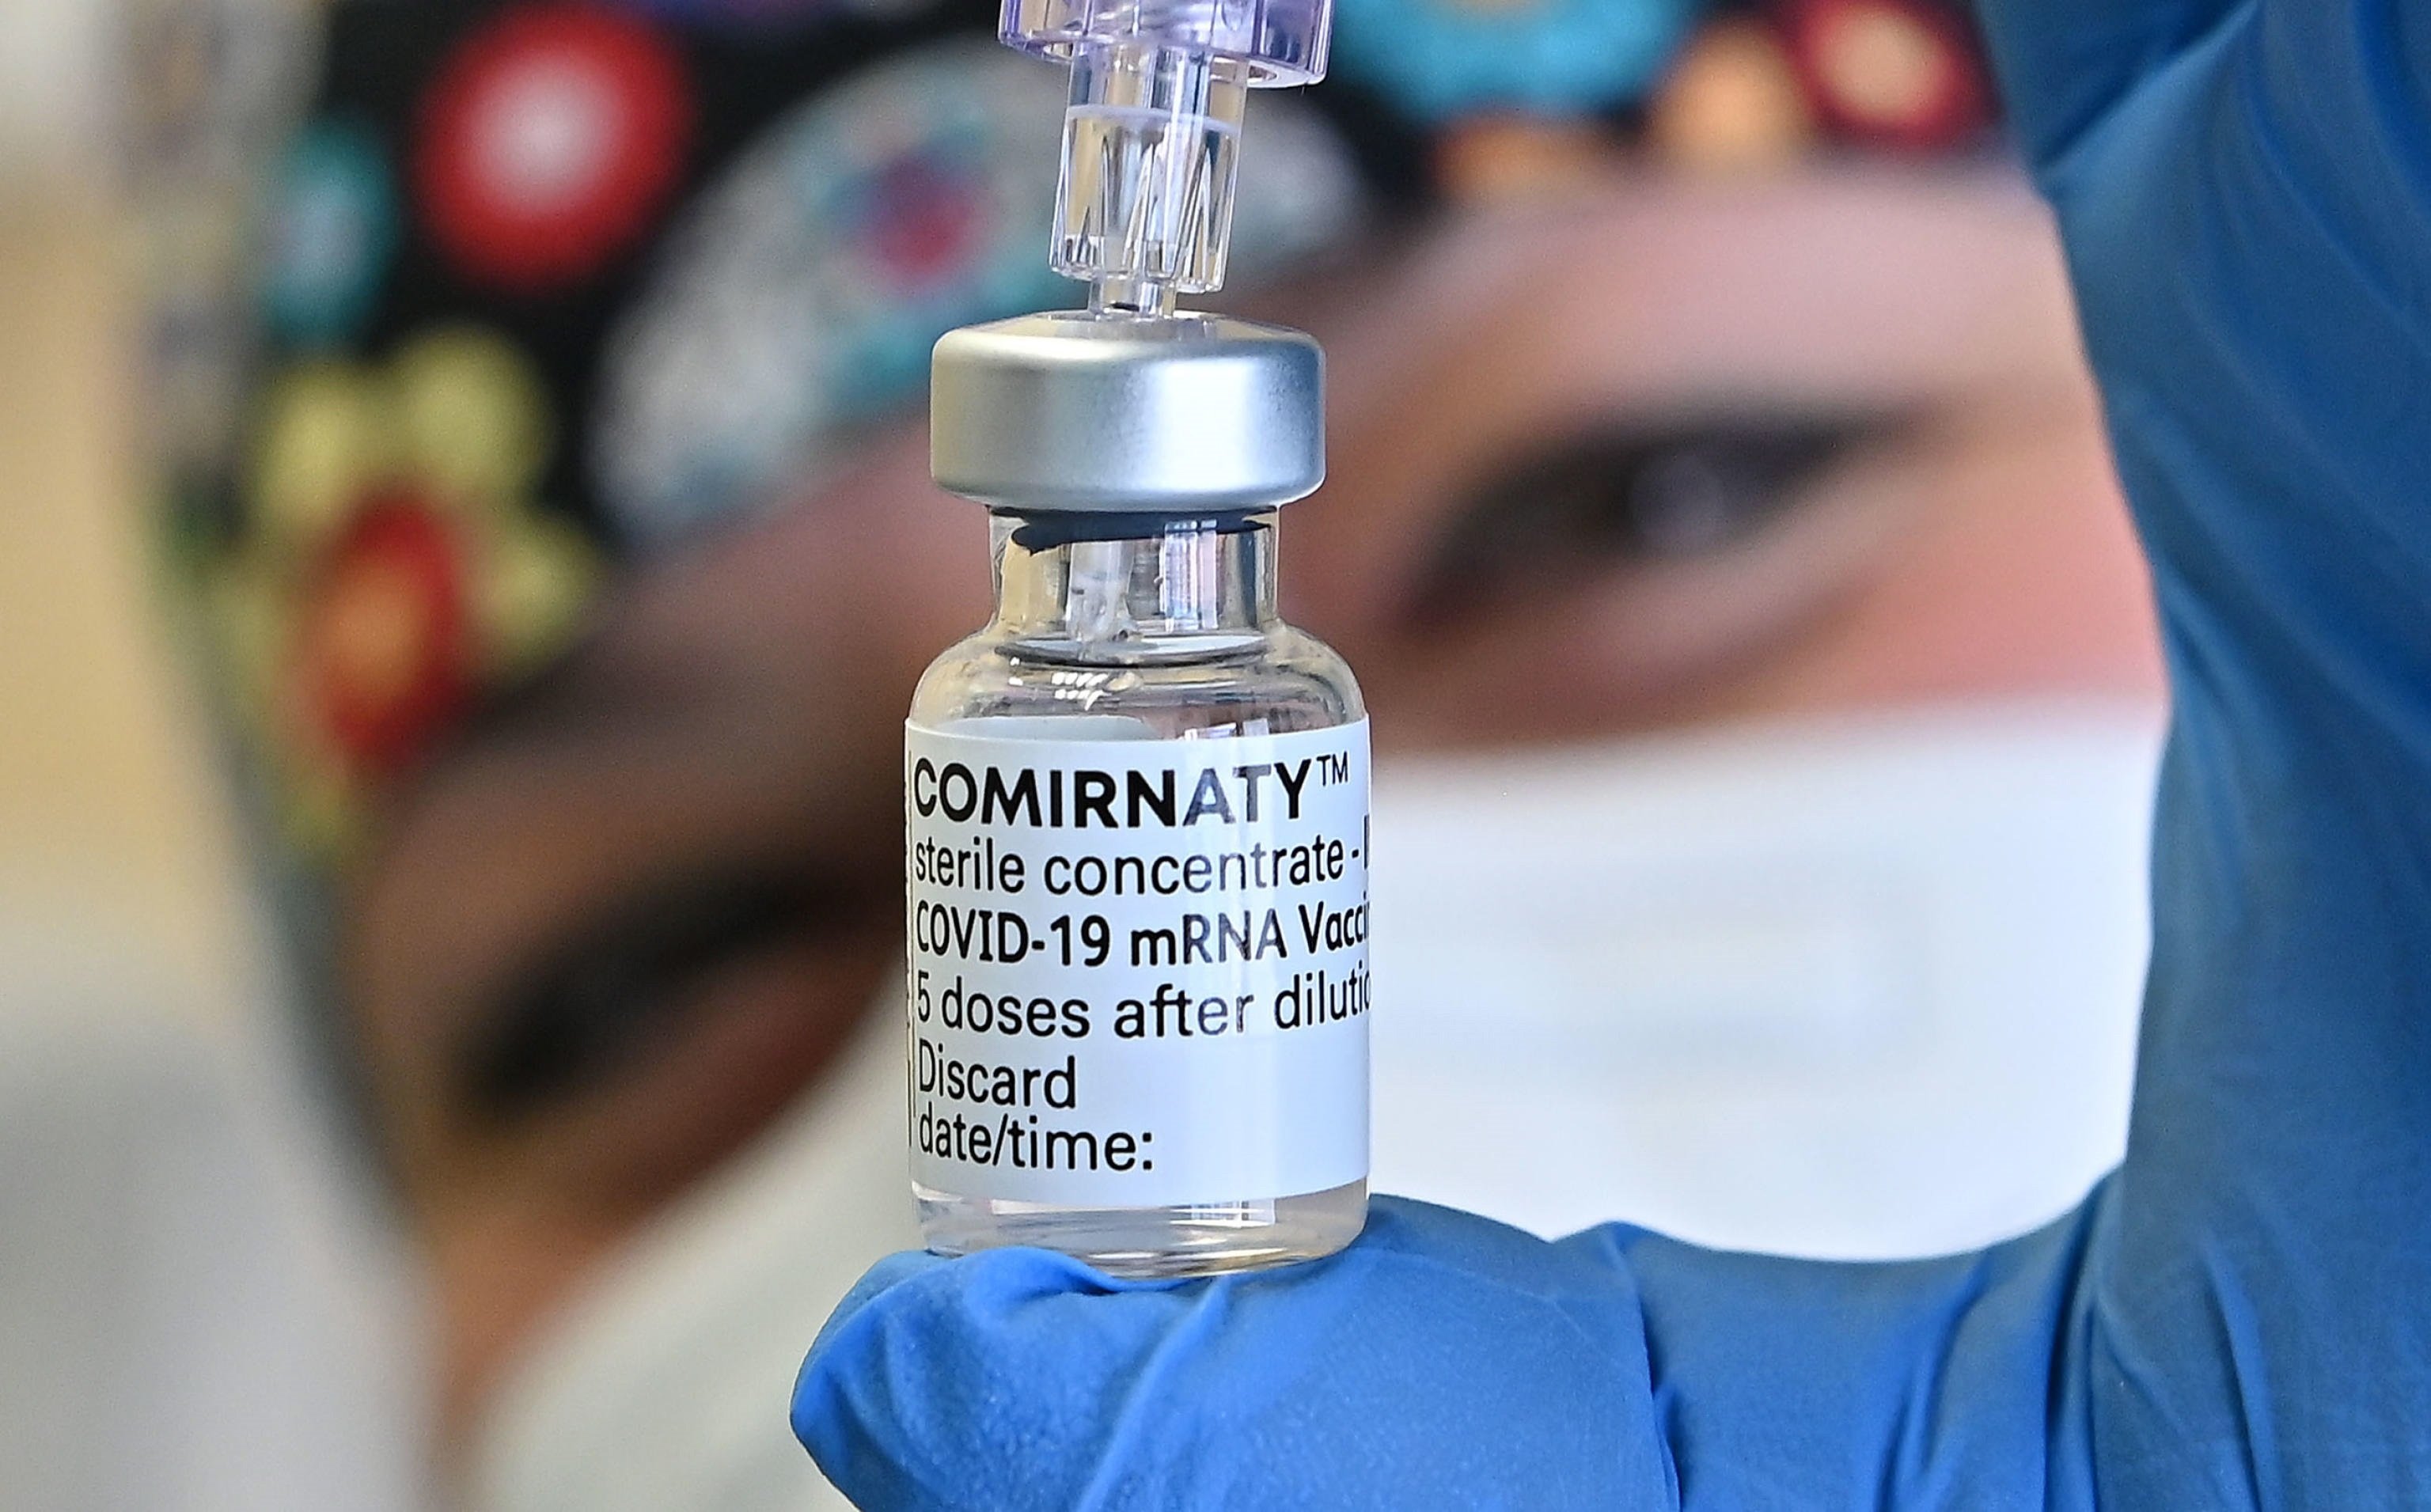 Catalonia has almost 70,000 expired vaccine doses in the fridge